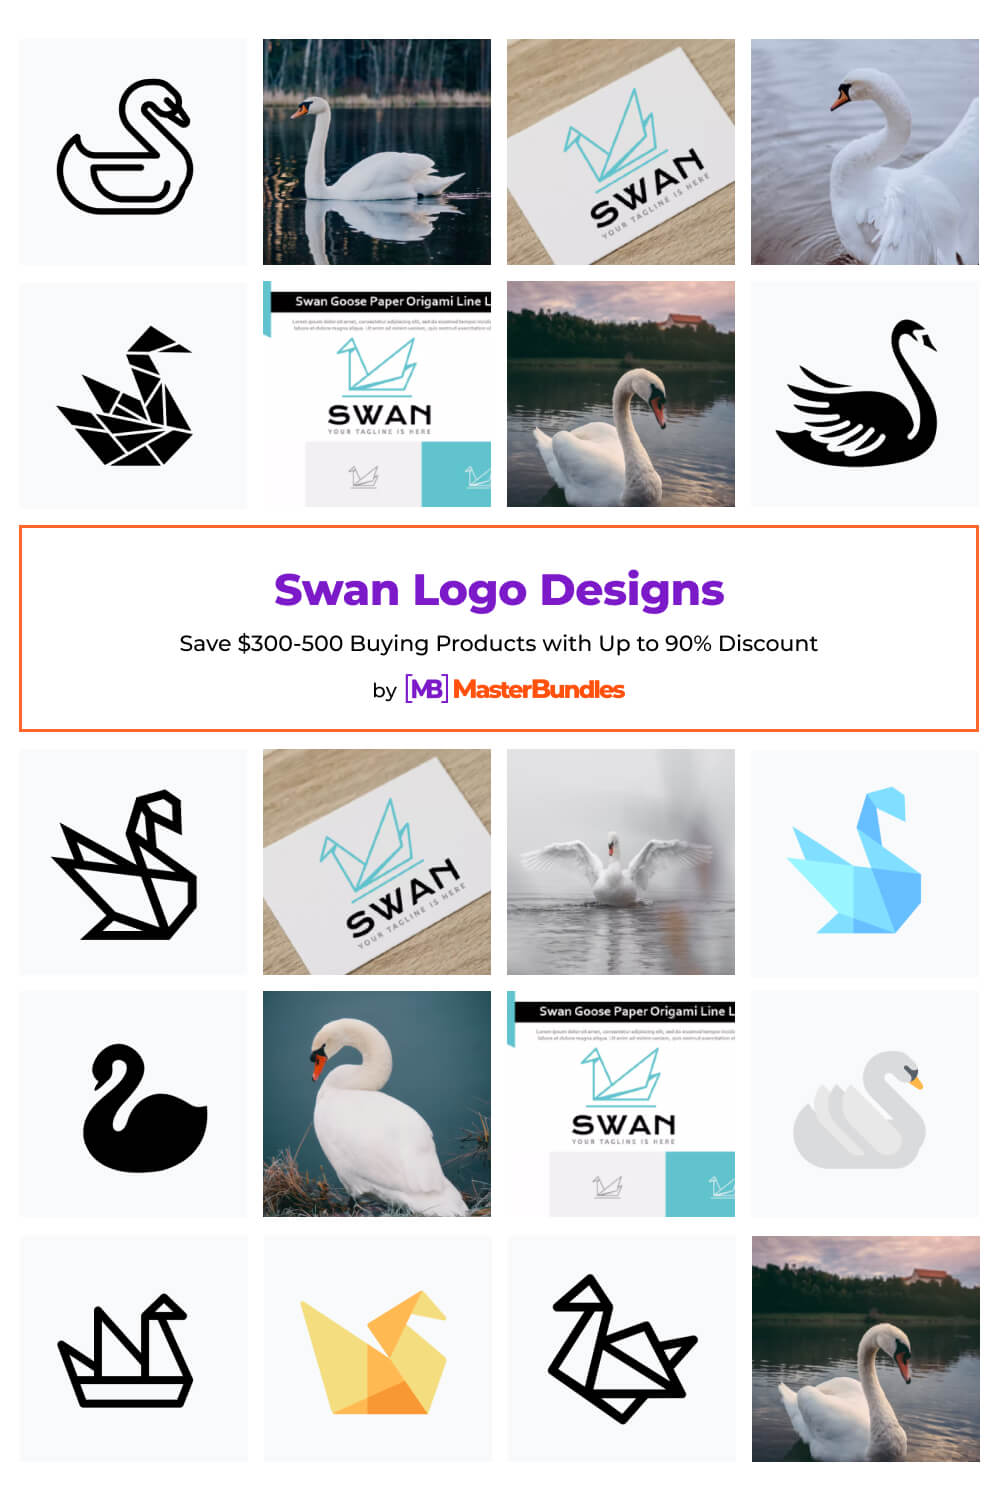 swan logo designs pinterest image.